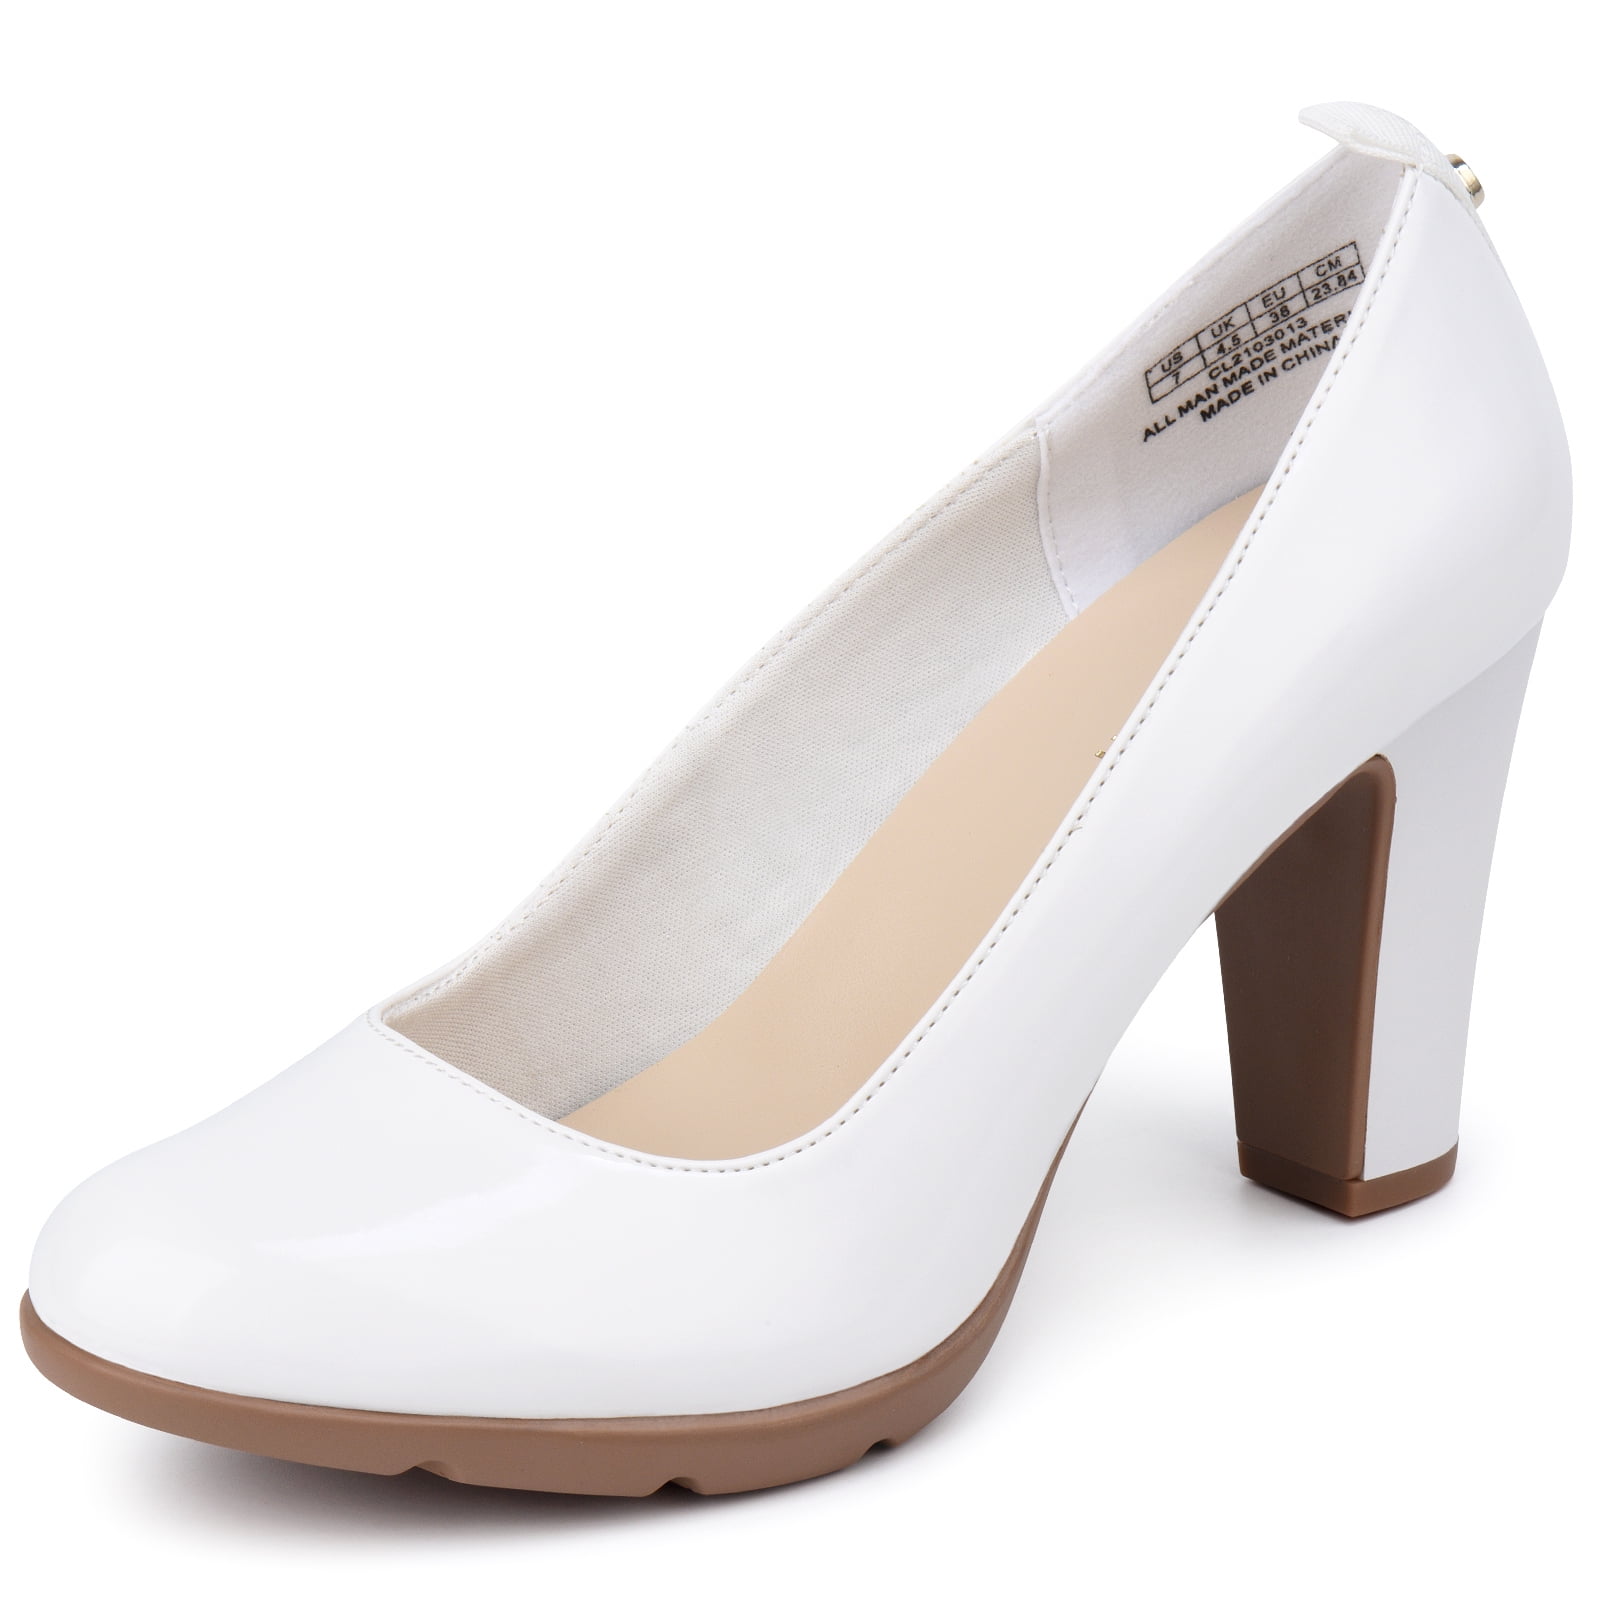 Sandra high heel (Off-white/ Lambskin) Court Pumps with 3 inch heels. -  Minimalist